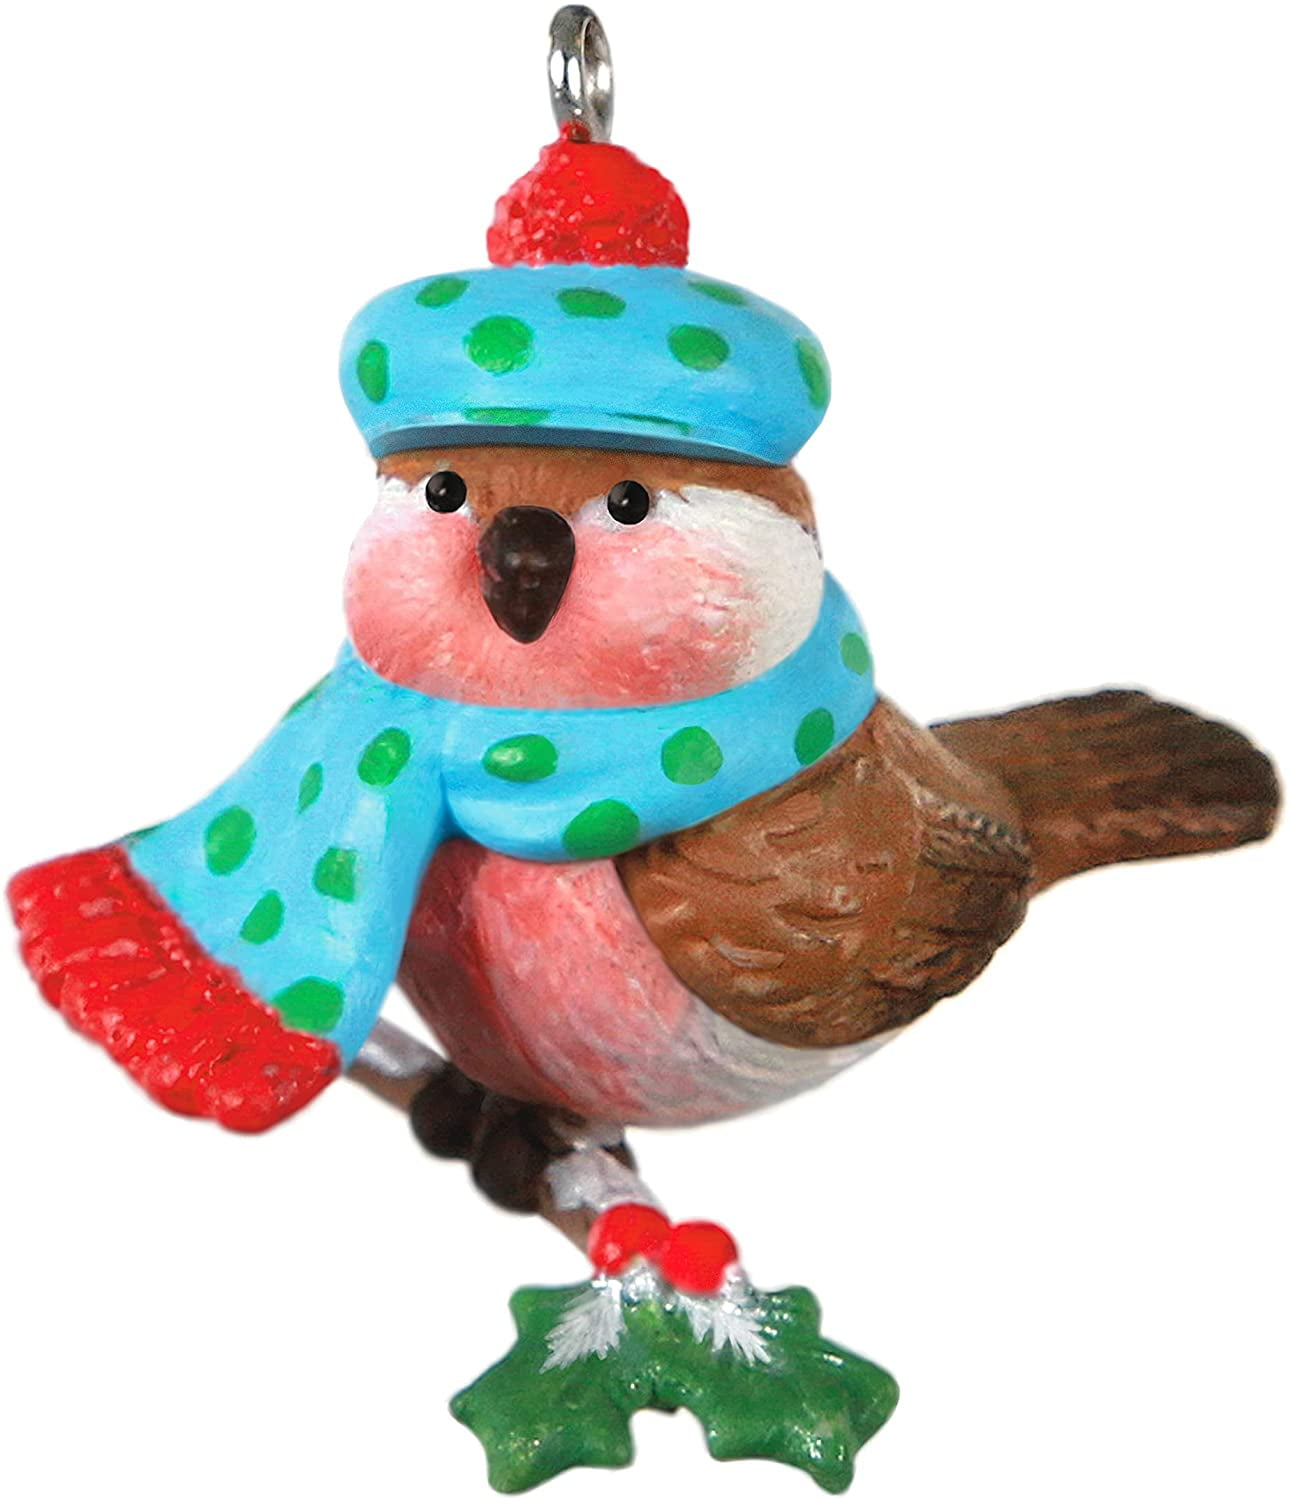 New 2019 Hallmark COZY LIL' CRITTERS #1 Series Bird Scarf Hat Miniature Ornament 